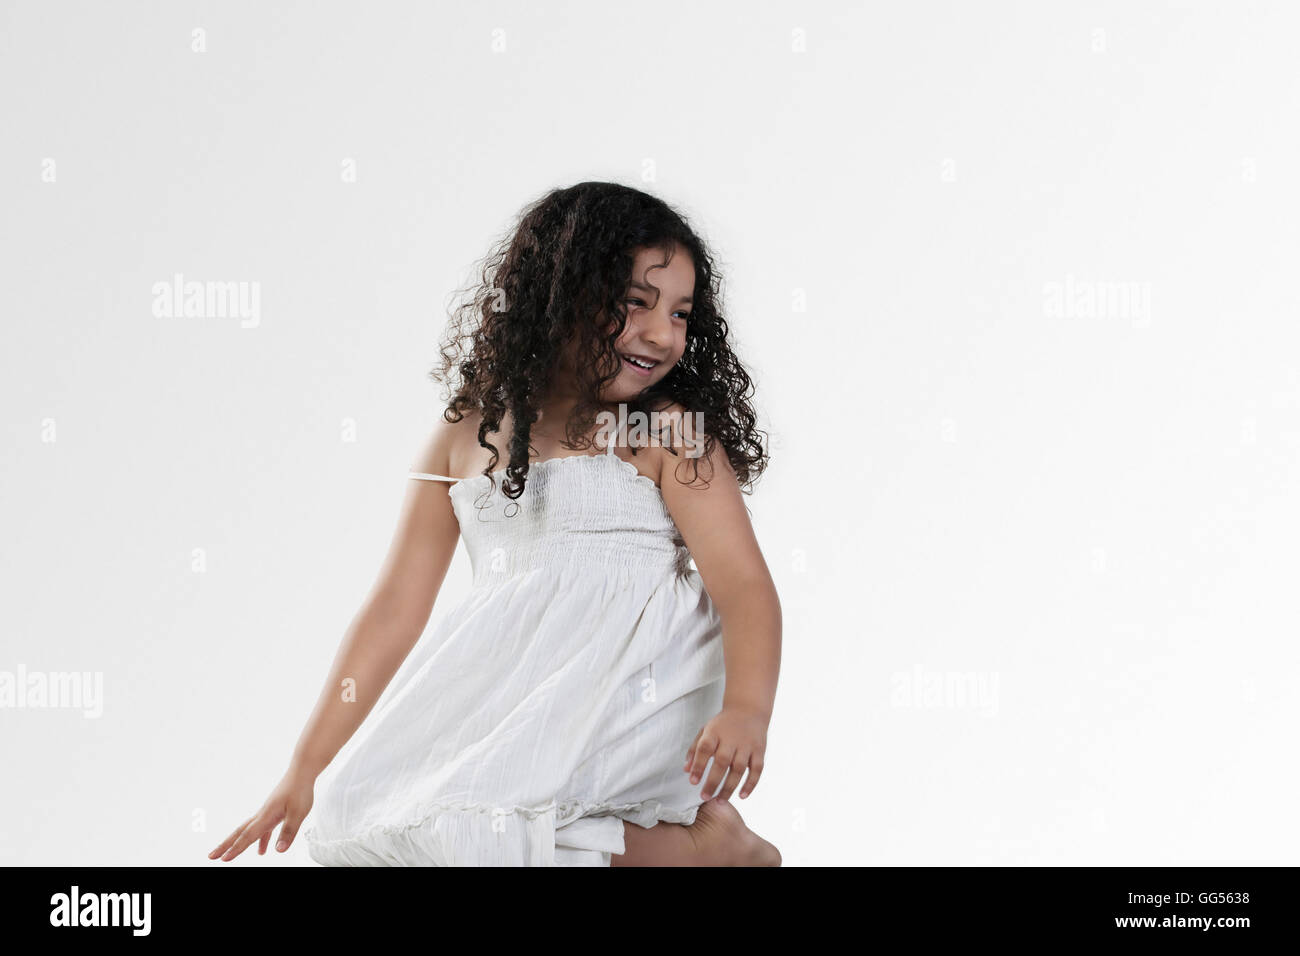 A little girl having fun Stock Photo